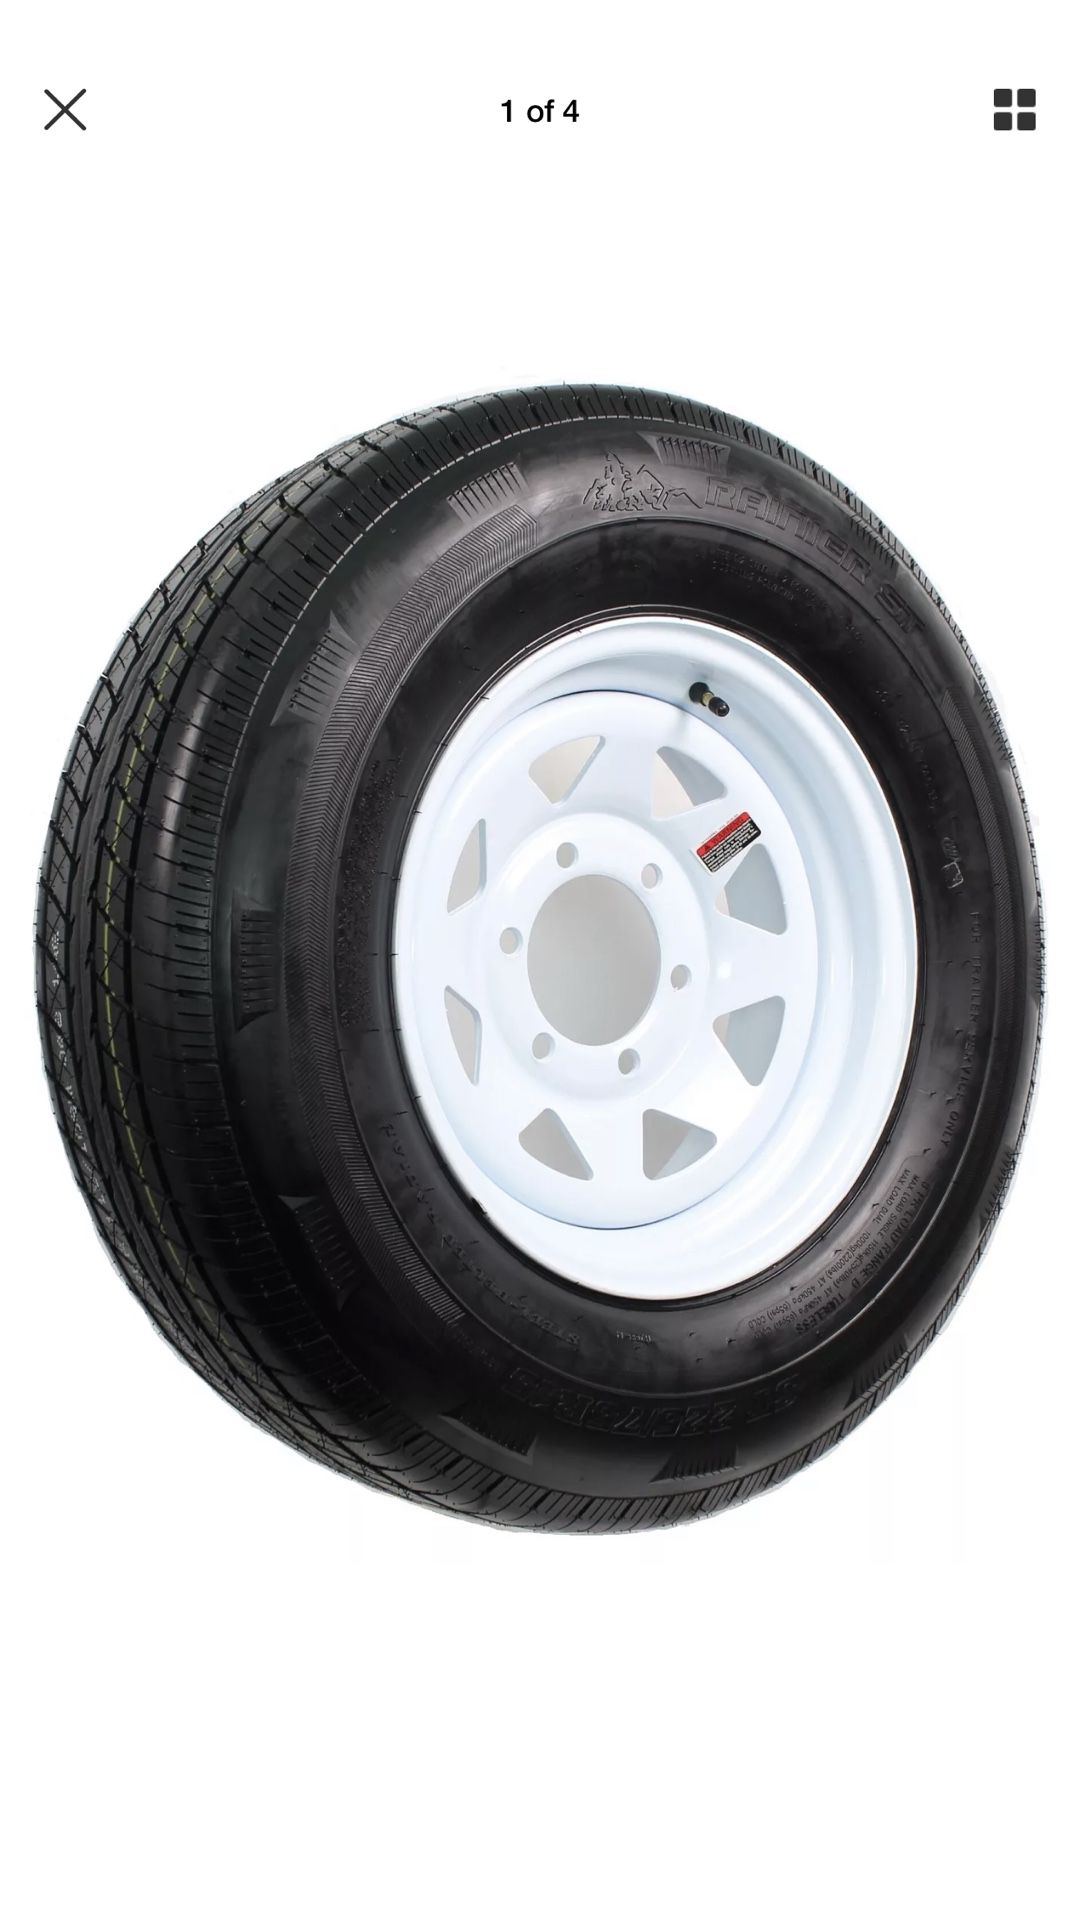 Radial Trailer Tire On Rim ST225/75R15 225/75-15 10 ply 6 Lug Wheel White Spoke